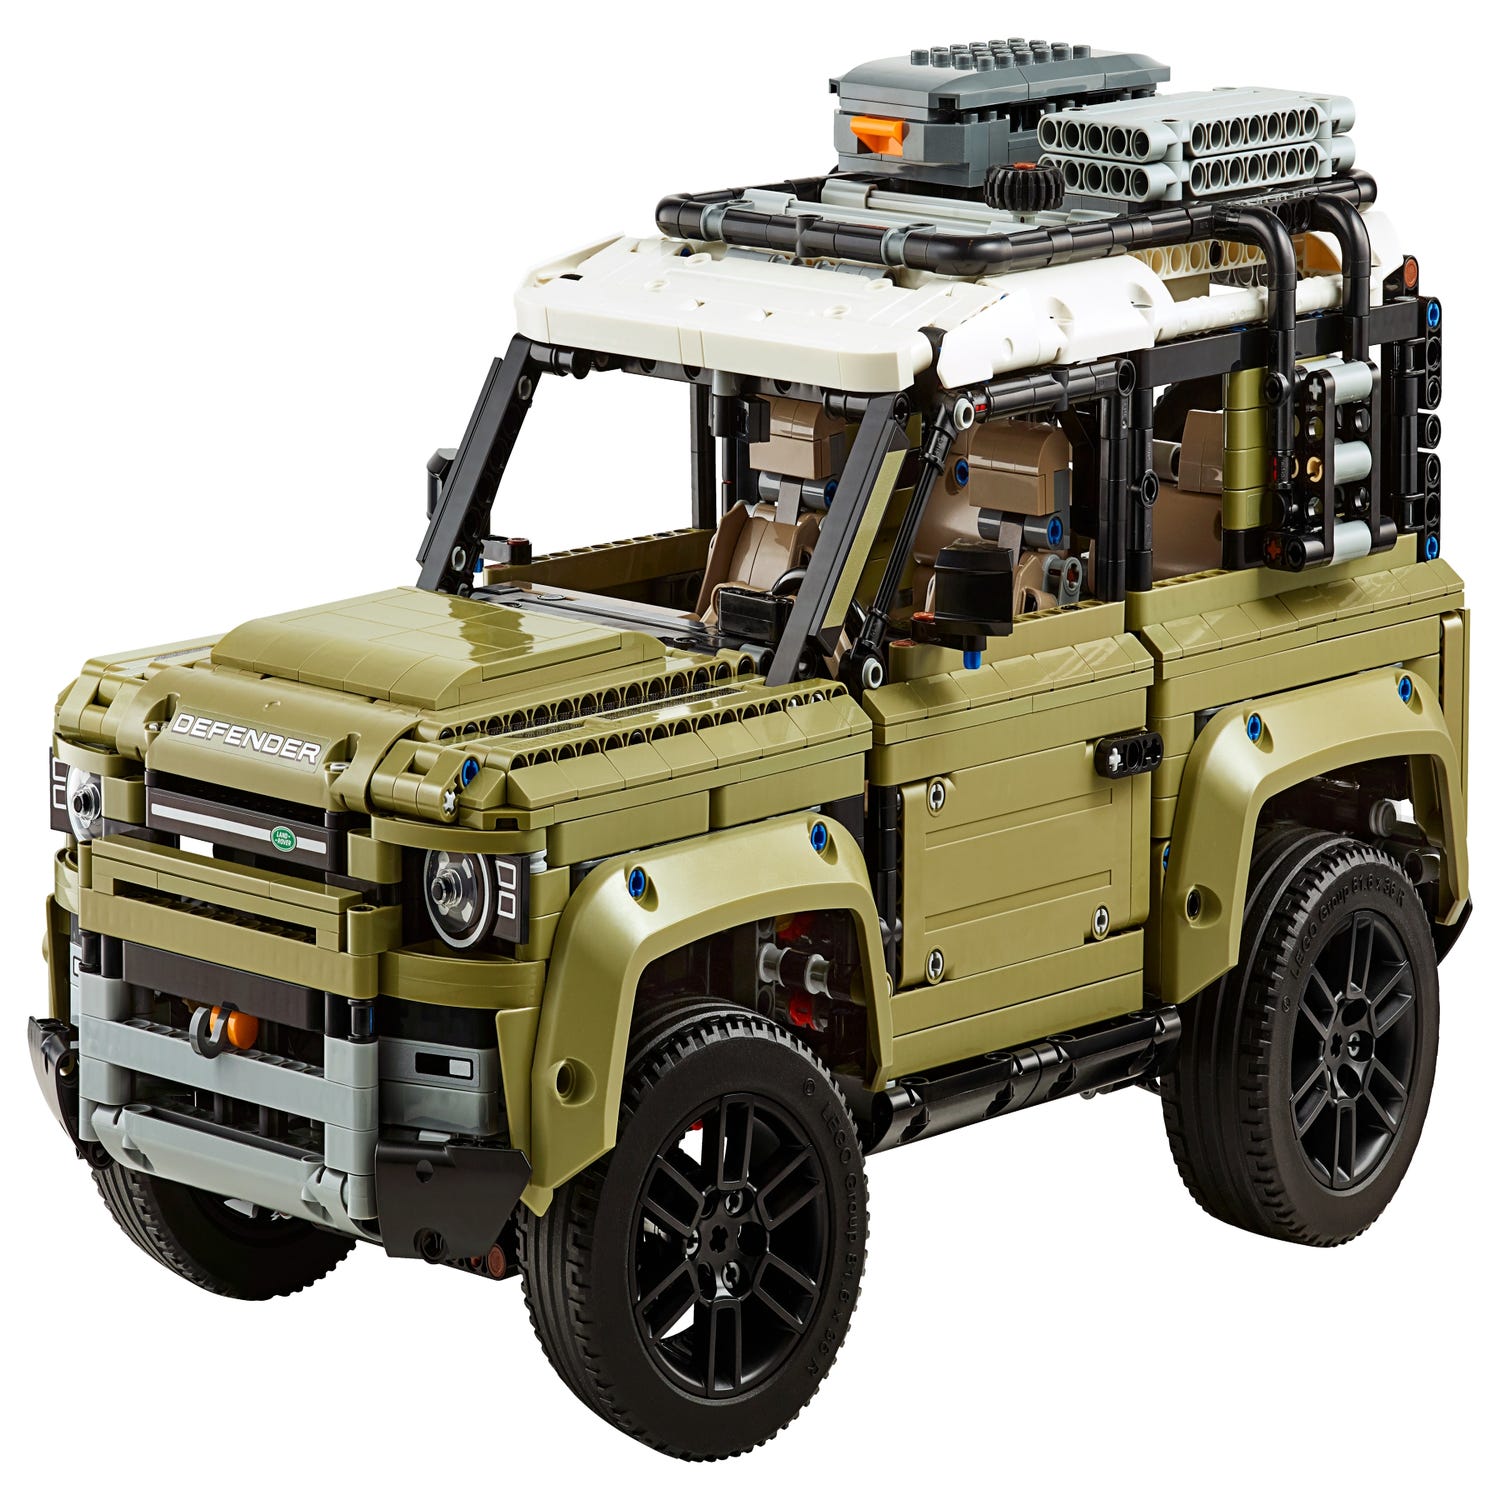 Kontinent komfort udluftning Land Rover Defender 42110 | テクニック |レゴ®ストア公式オンラインショップJPで購入